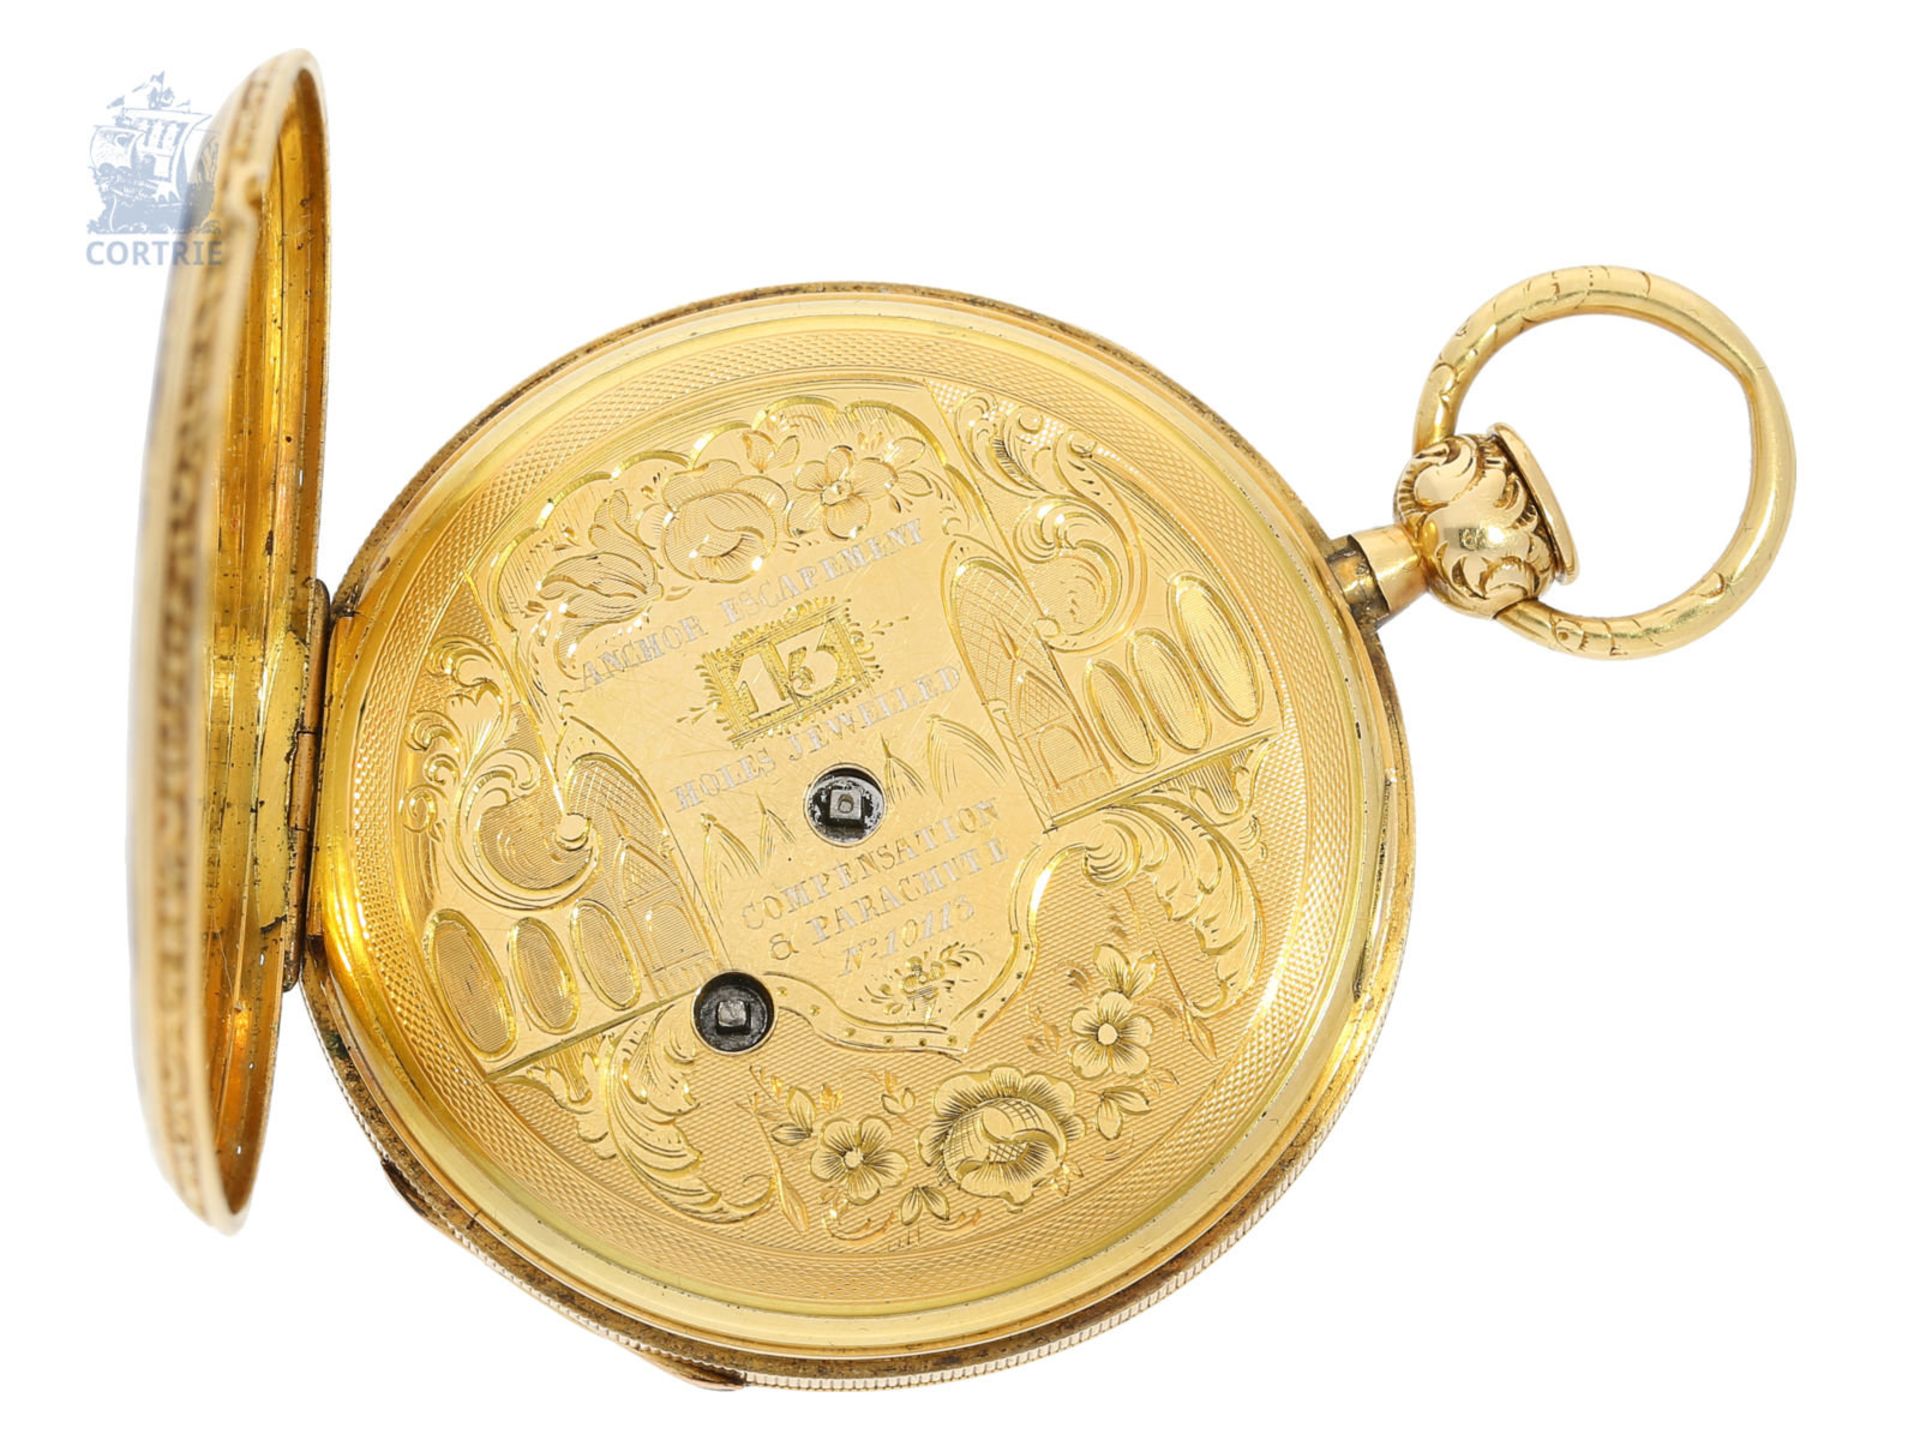 Pocket watch: very fine gold/ enamel Lepine watch repeater, portrait of Napoleon, exquisite - Bild 2 aus 4